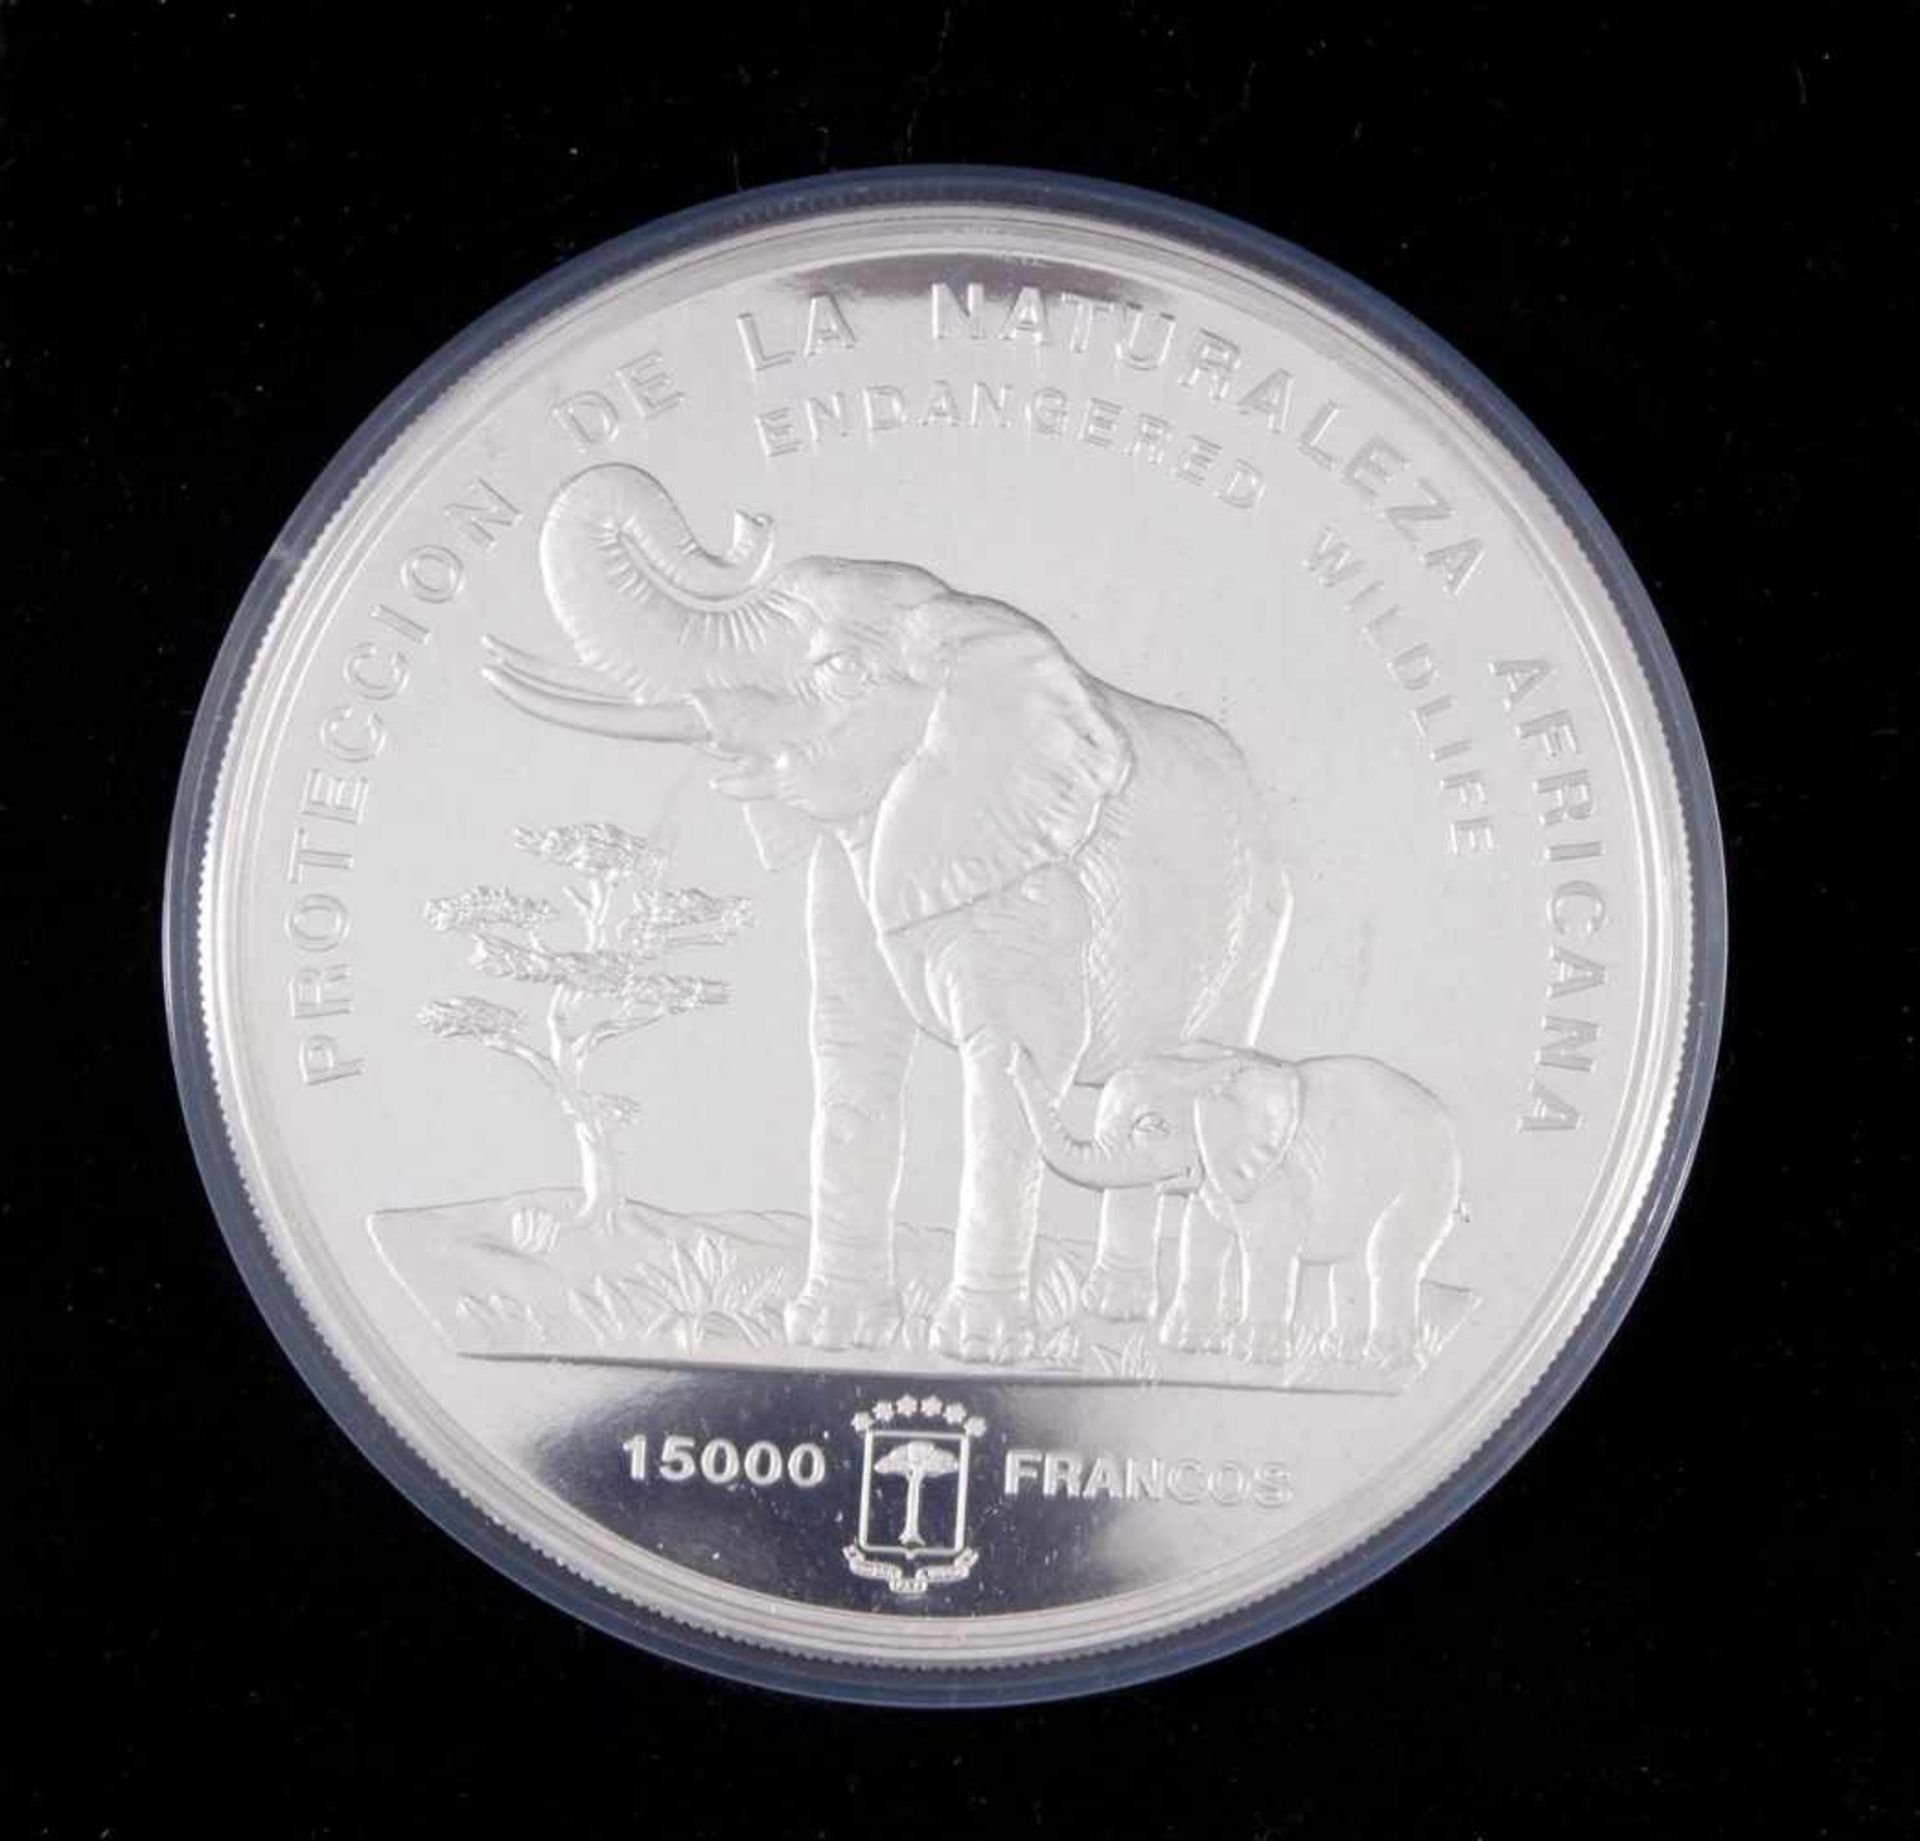 Silbermünze 15.000 Francos 1992 Guinea, 999,9 Silber, 1 kgPP in Münzkapsel, mit Zertifikat und - Bild 2 aus 3